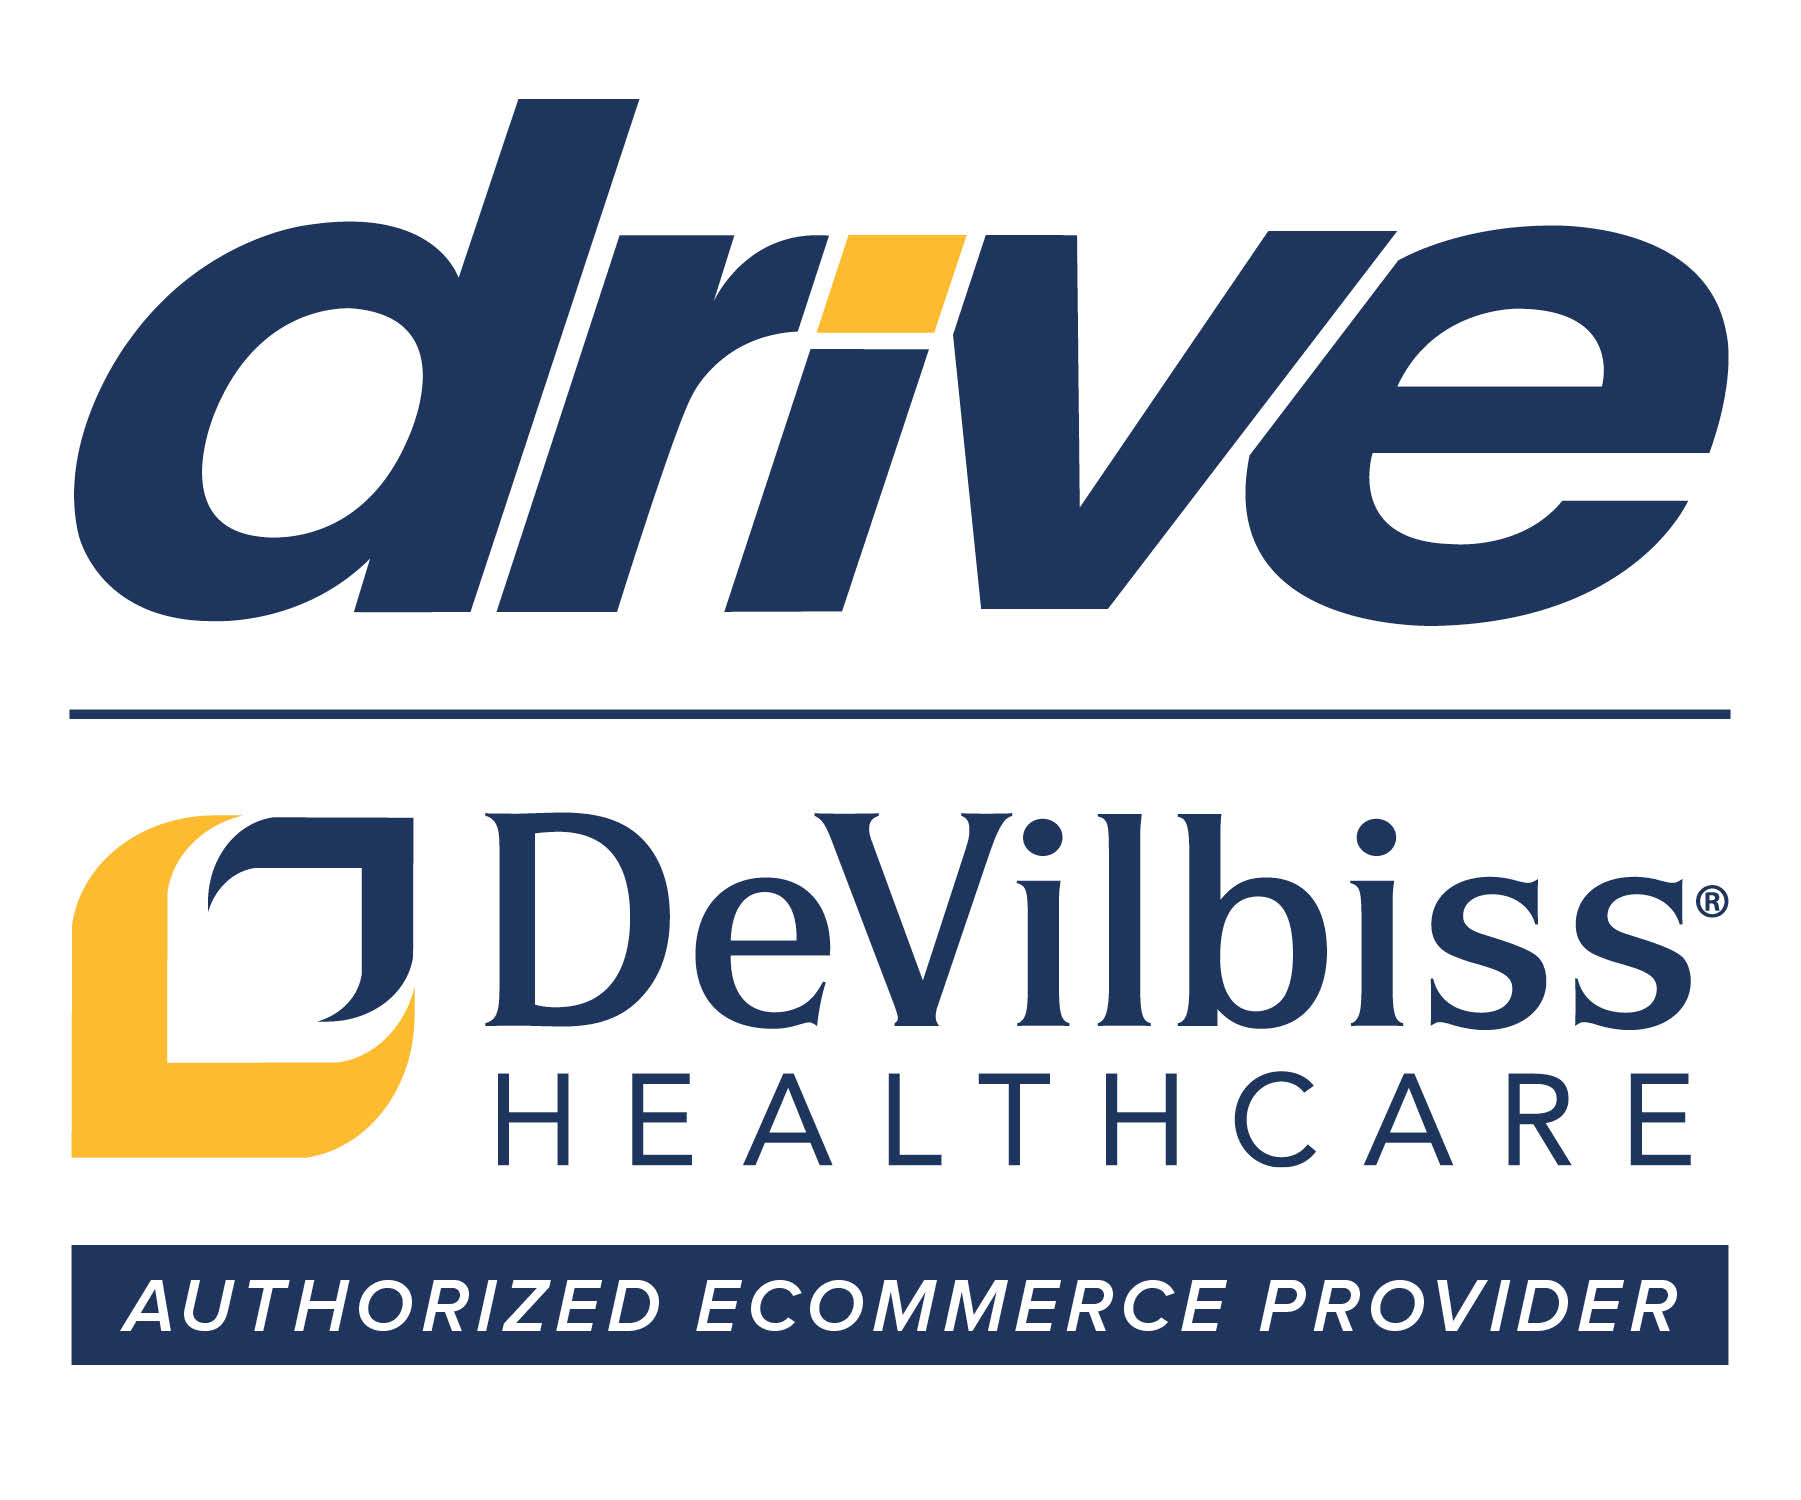 drive-devilbiss-authorized-ecommerce-logo-copy.jpg